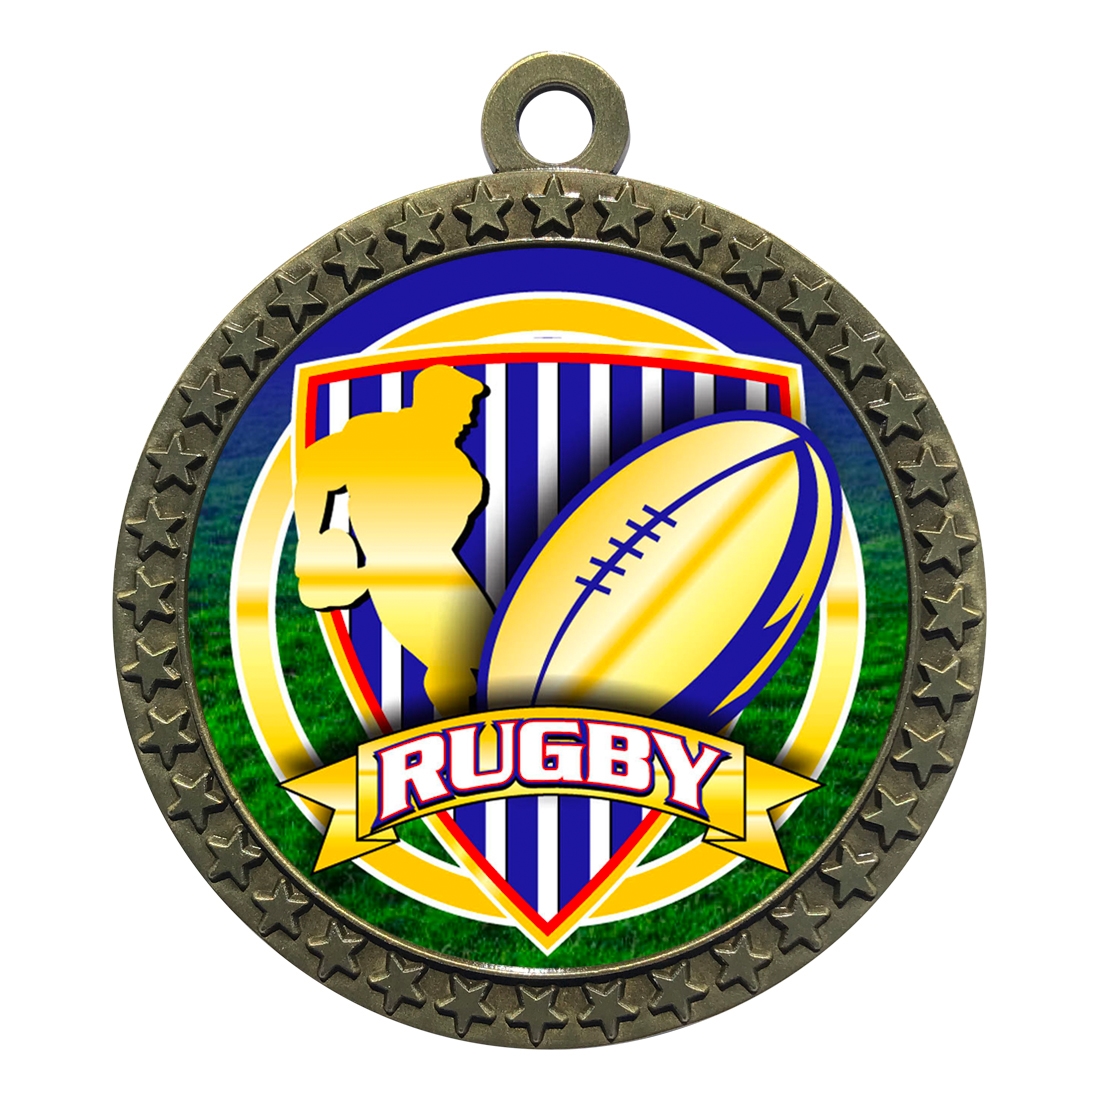 2-1/2" Rugby Medal